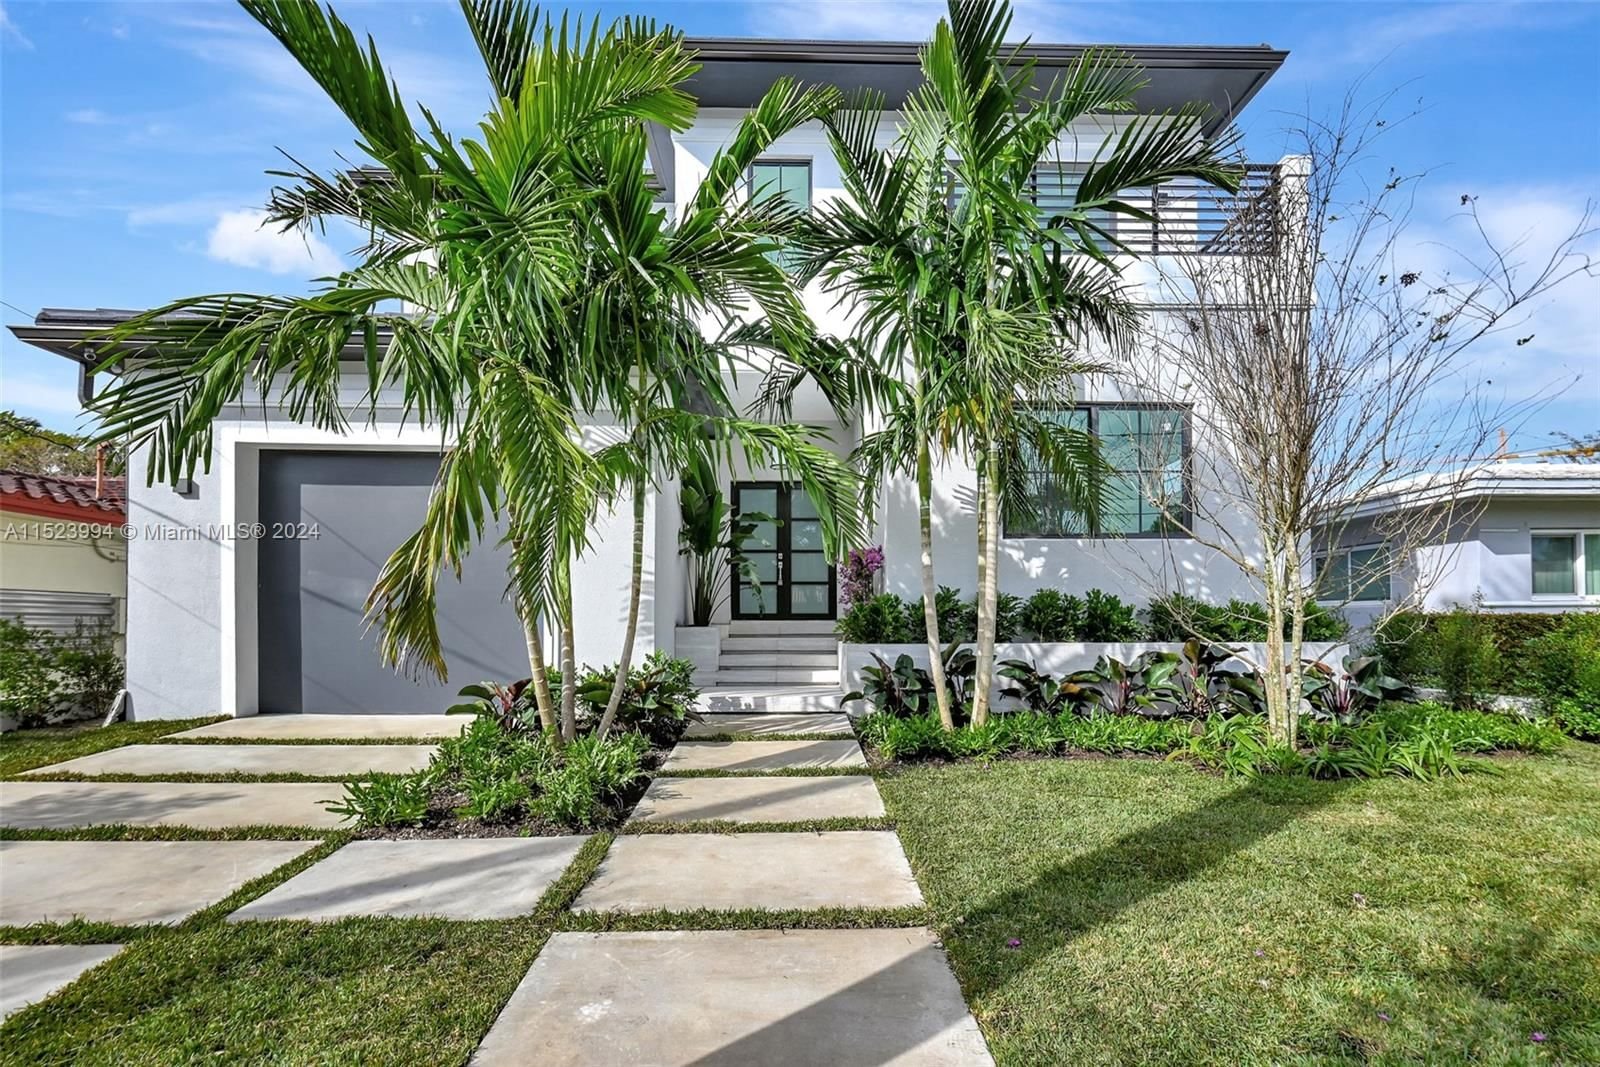 Real estate property located at 9264 Dickens Ave, Miami-Dade County, ¤ALTOS DEL MAR NO 5, Surfside, FL